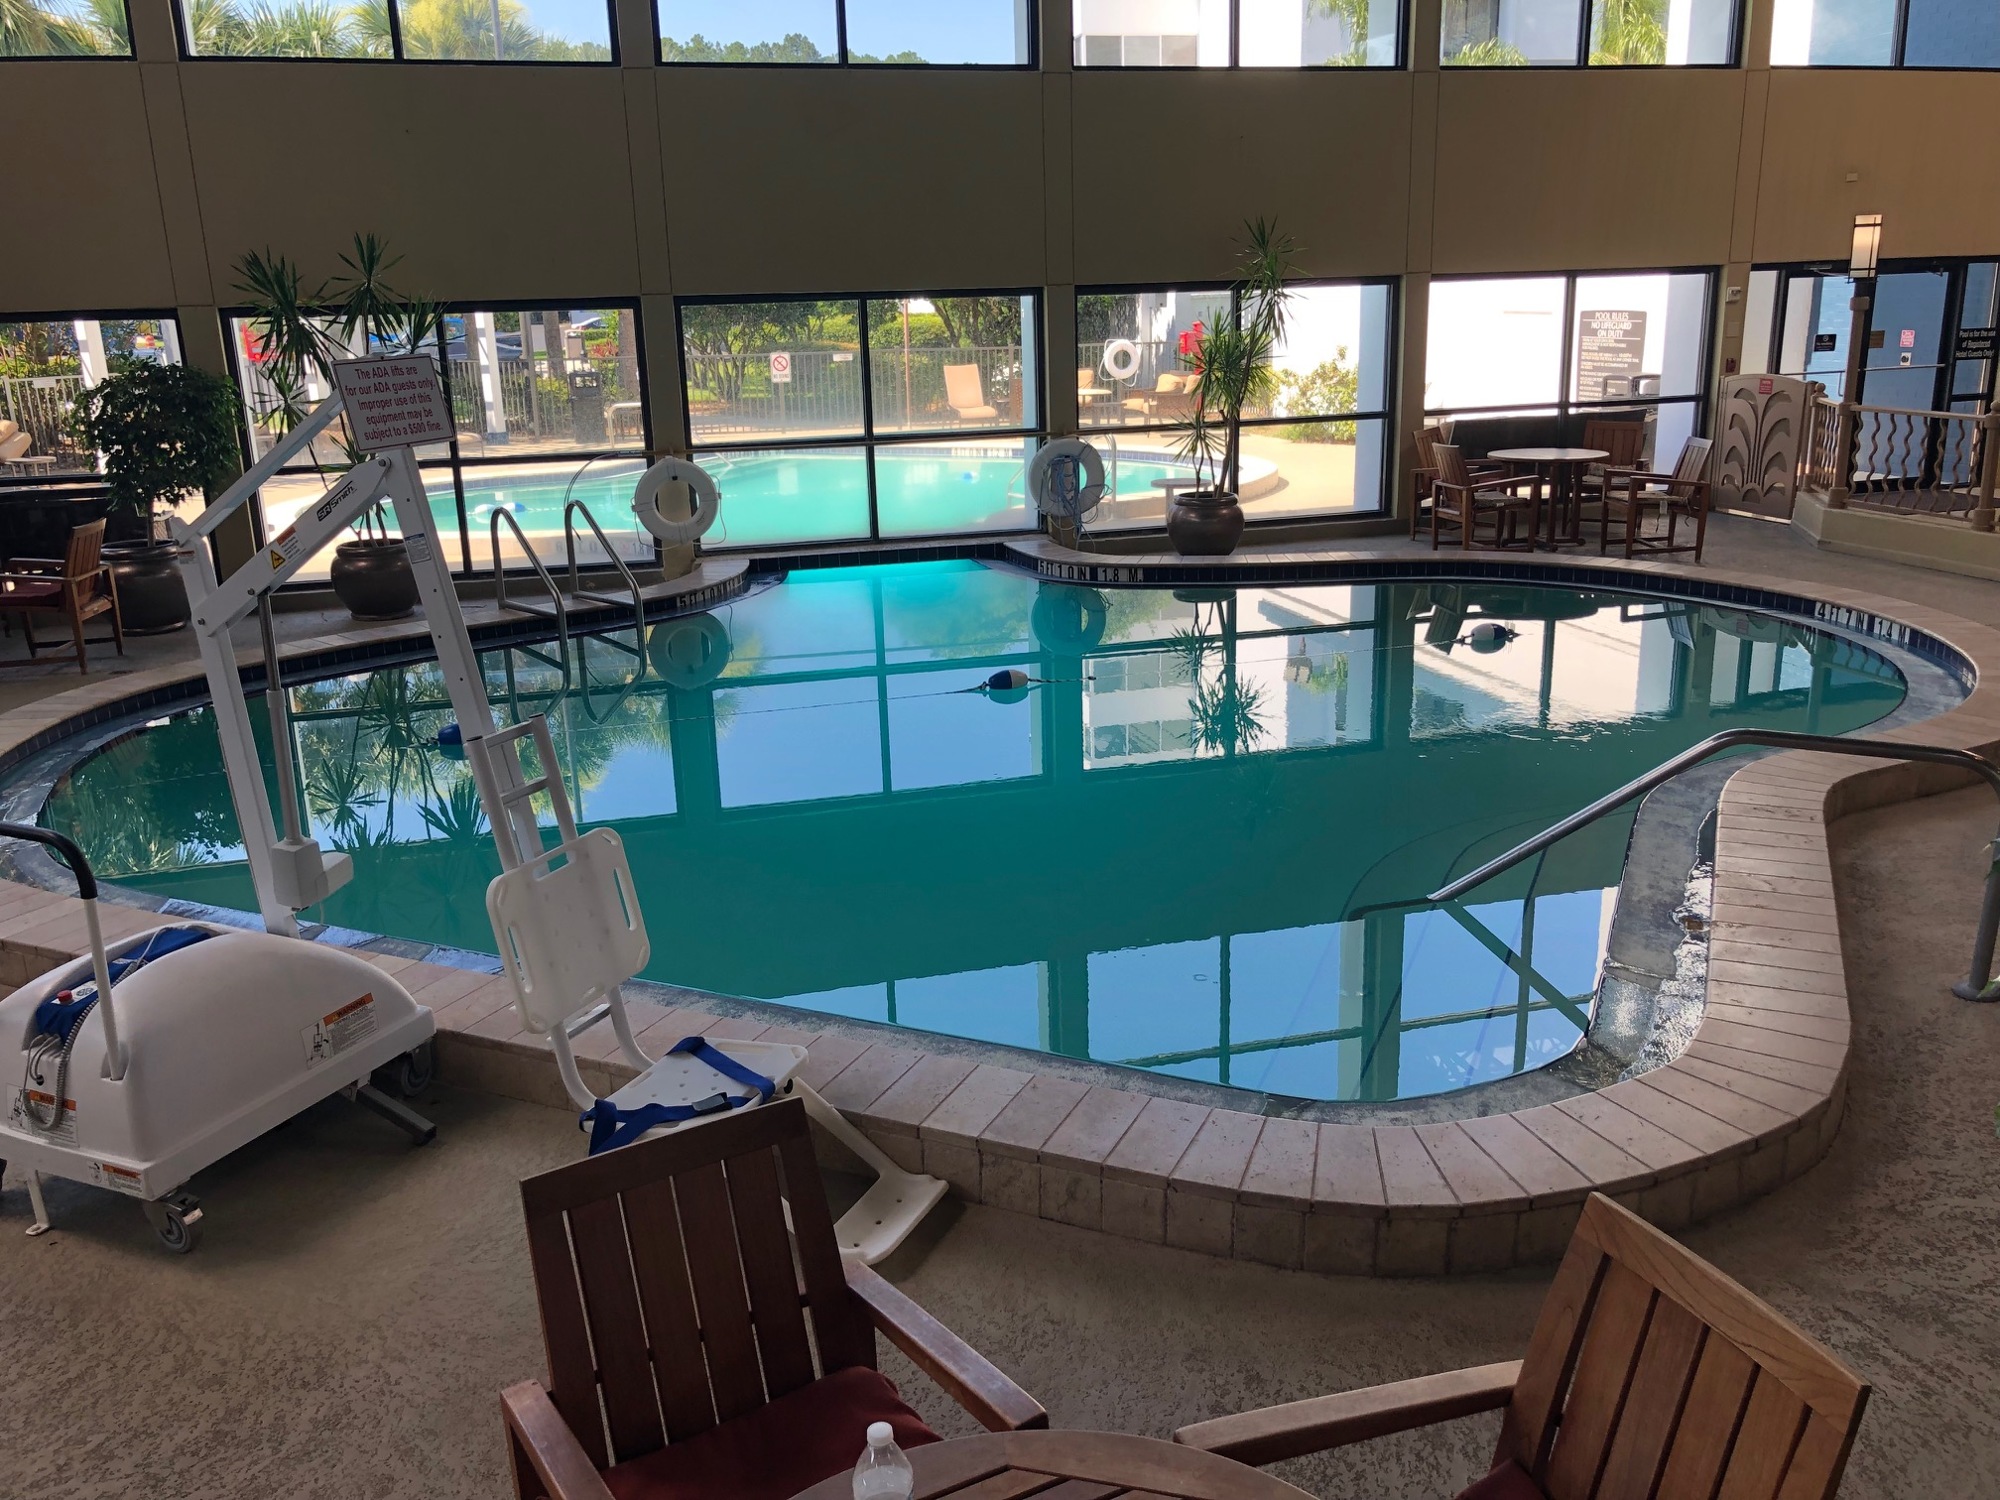 The indoor/outdoor pool at the Crowne Regency.